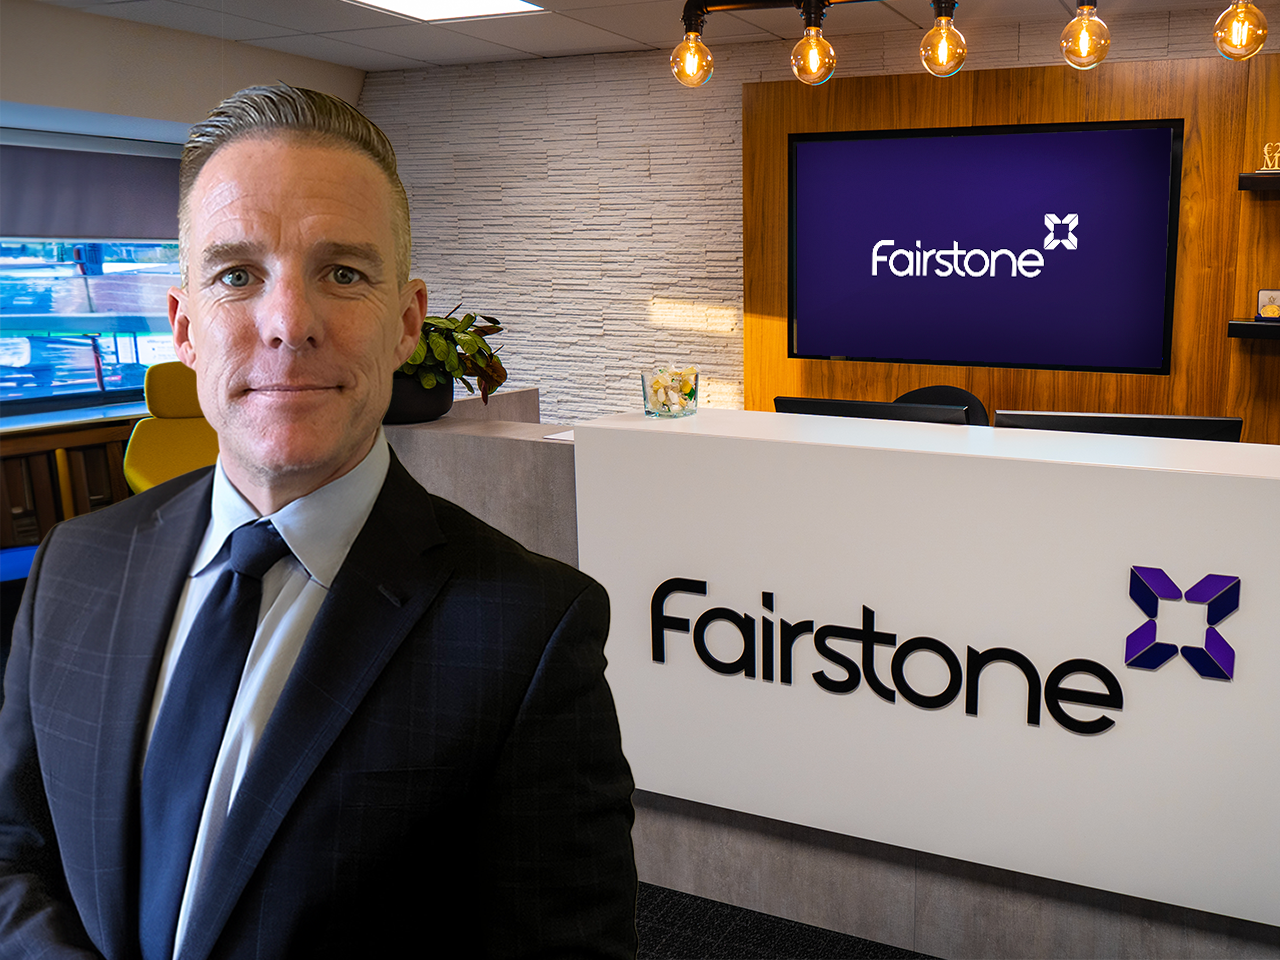 Fairstone Ireland CEO Paul Merriman with the Fairstone logo background